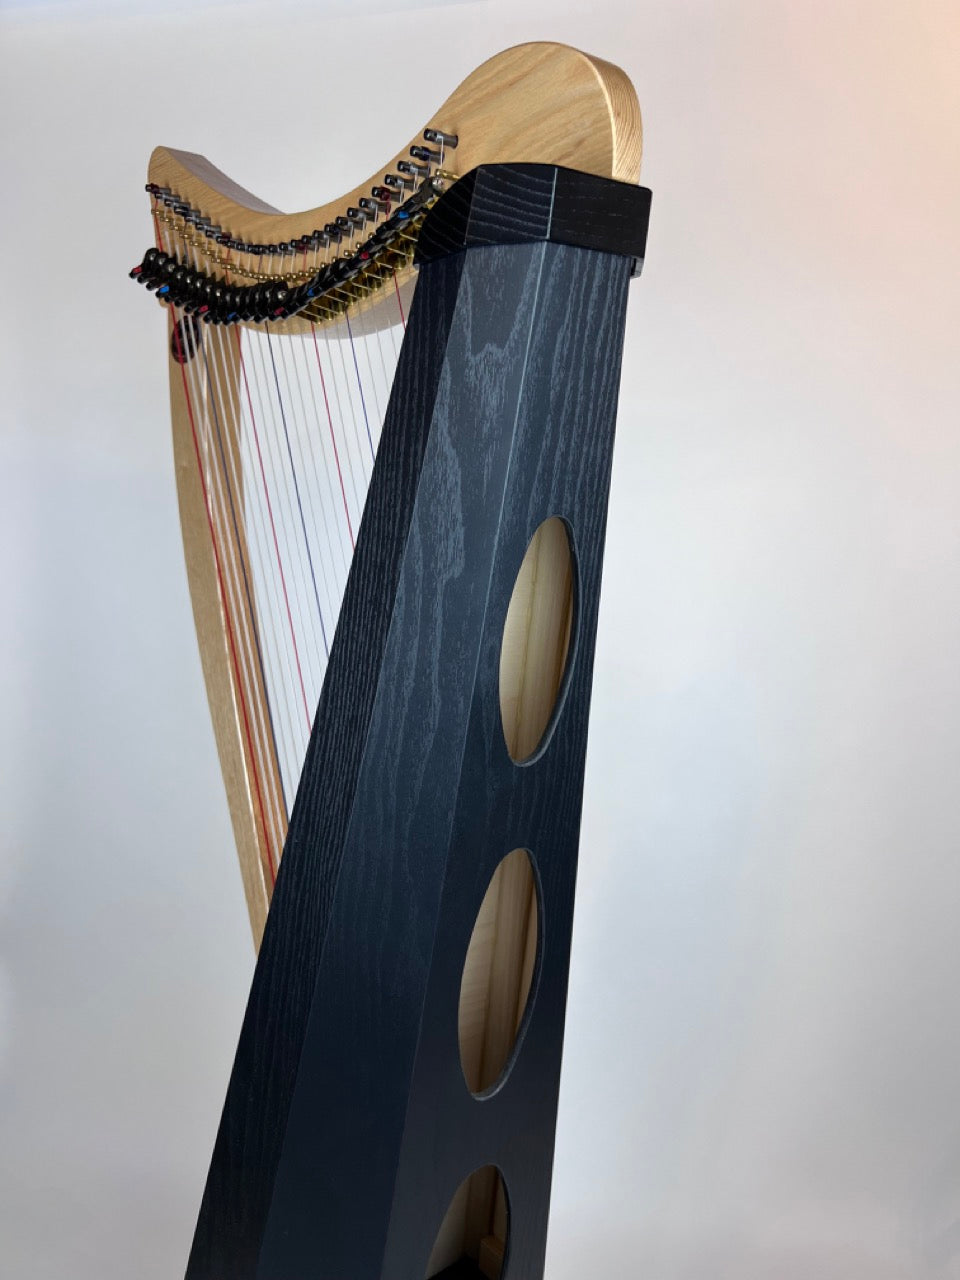 Dusty Strings Ravenna 26 Harp